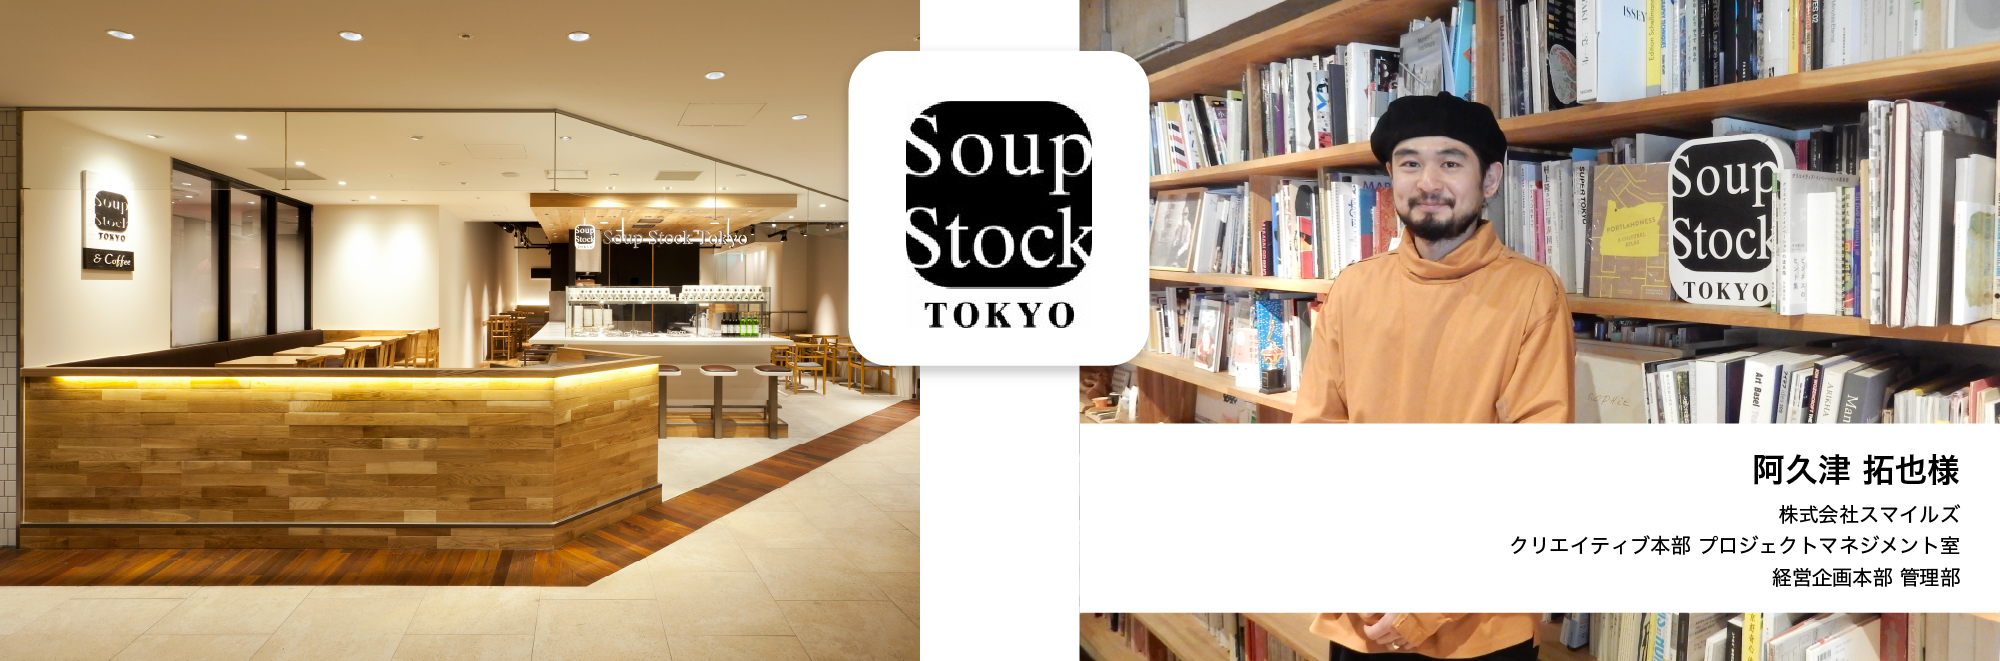 Soup Stock Tokyoの親会社である株式会社スマイルズ様のイメージ